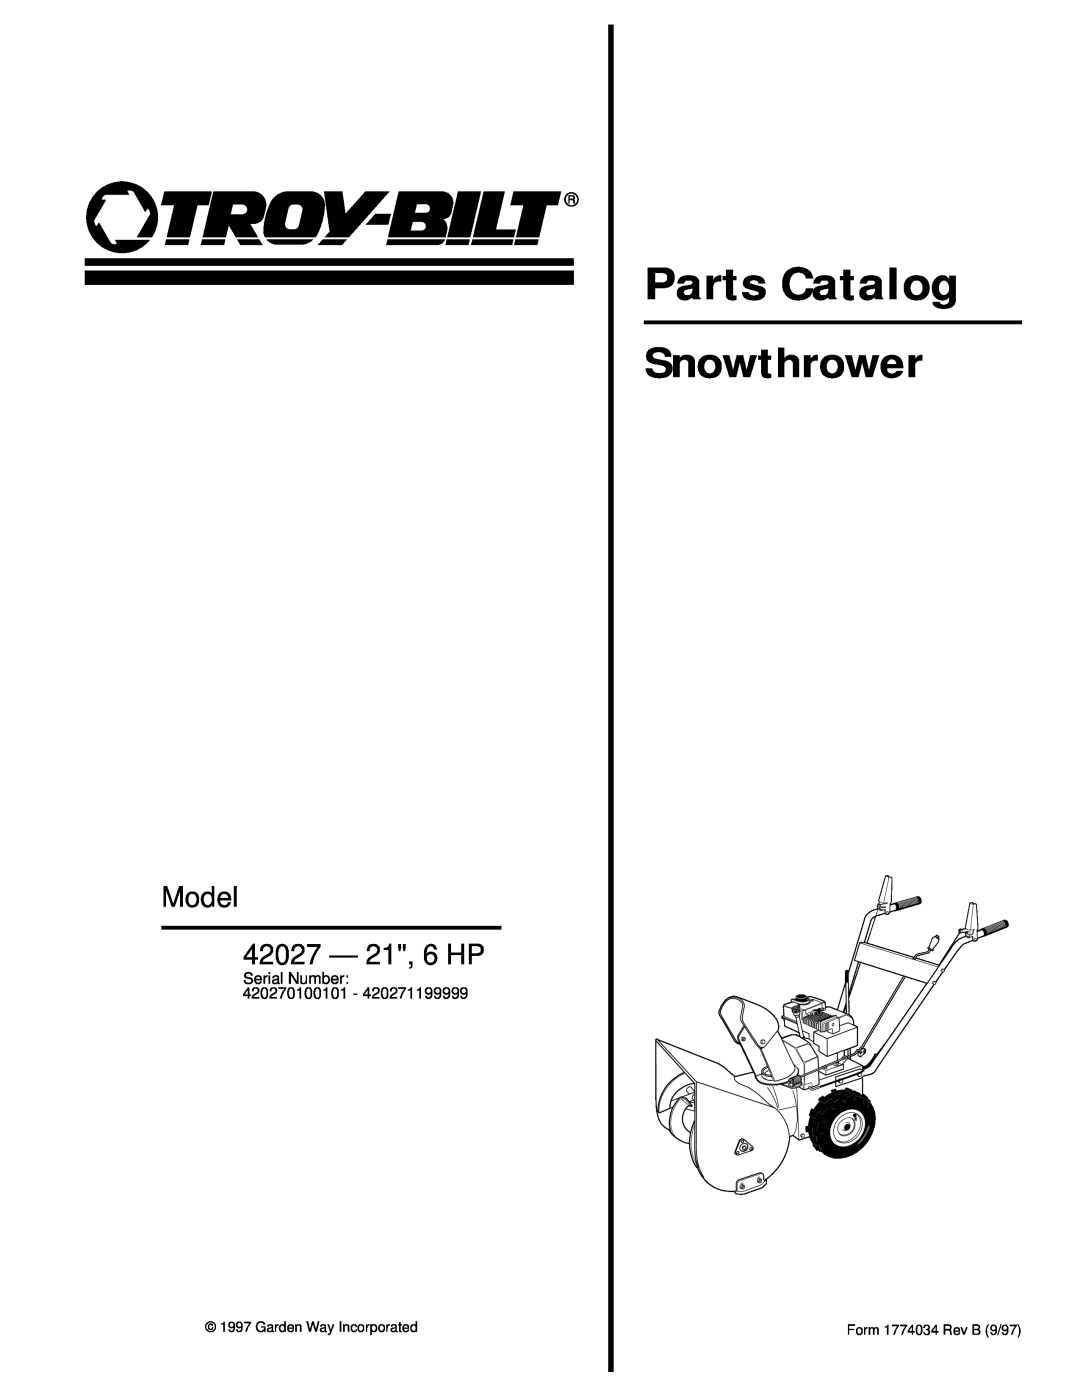 Troy-Bilt manual Parts Catalog, Snowthrower, Model 42027 - 21, 6 HP 